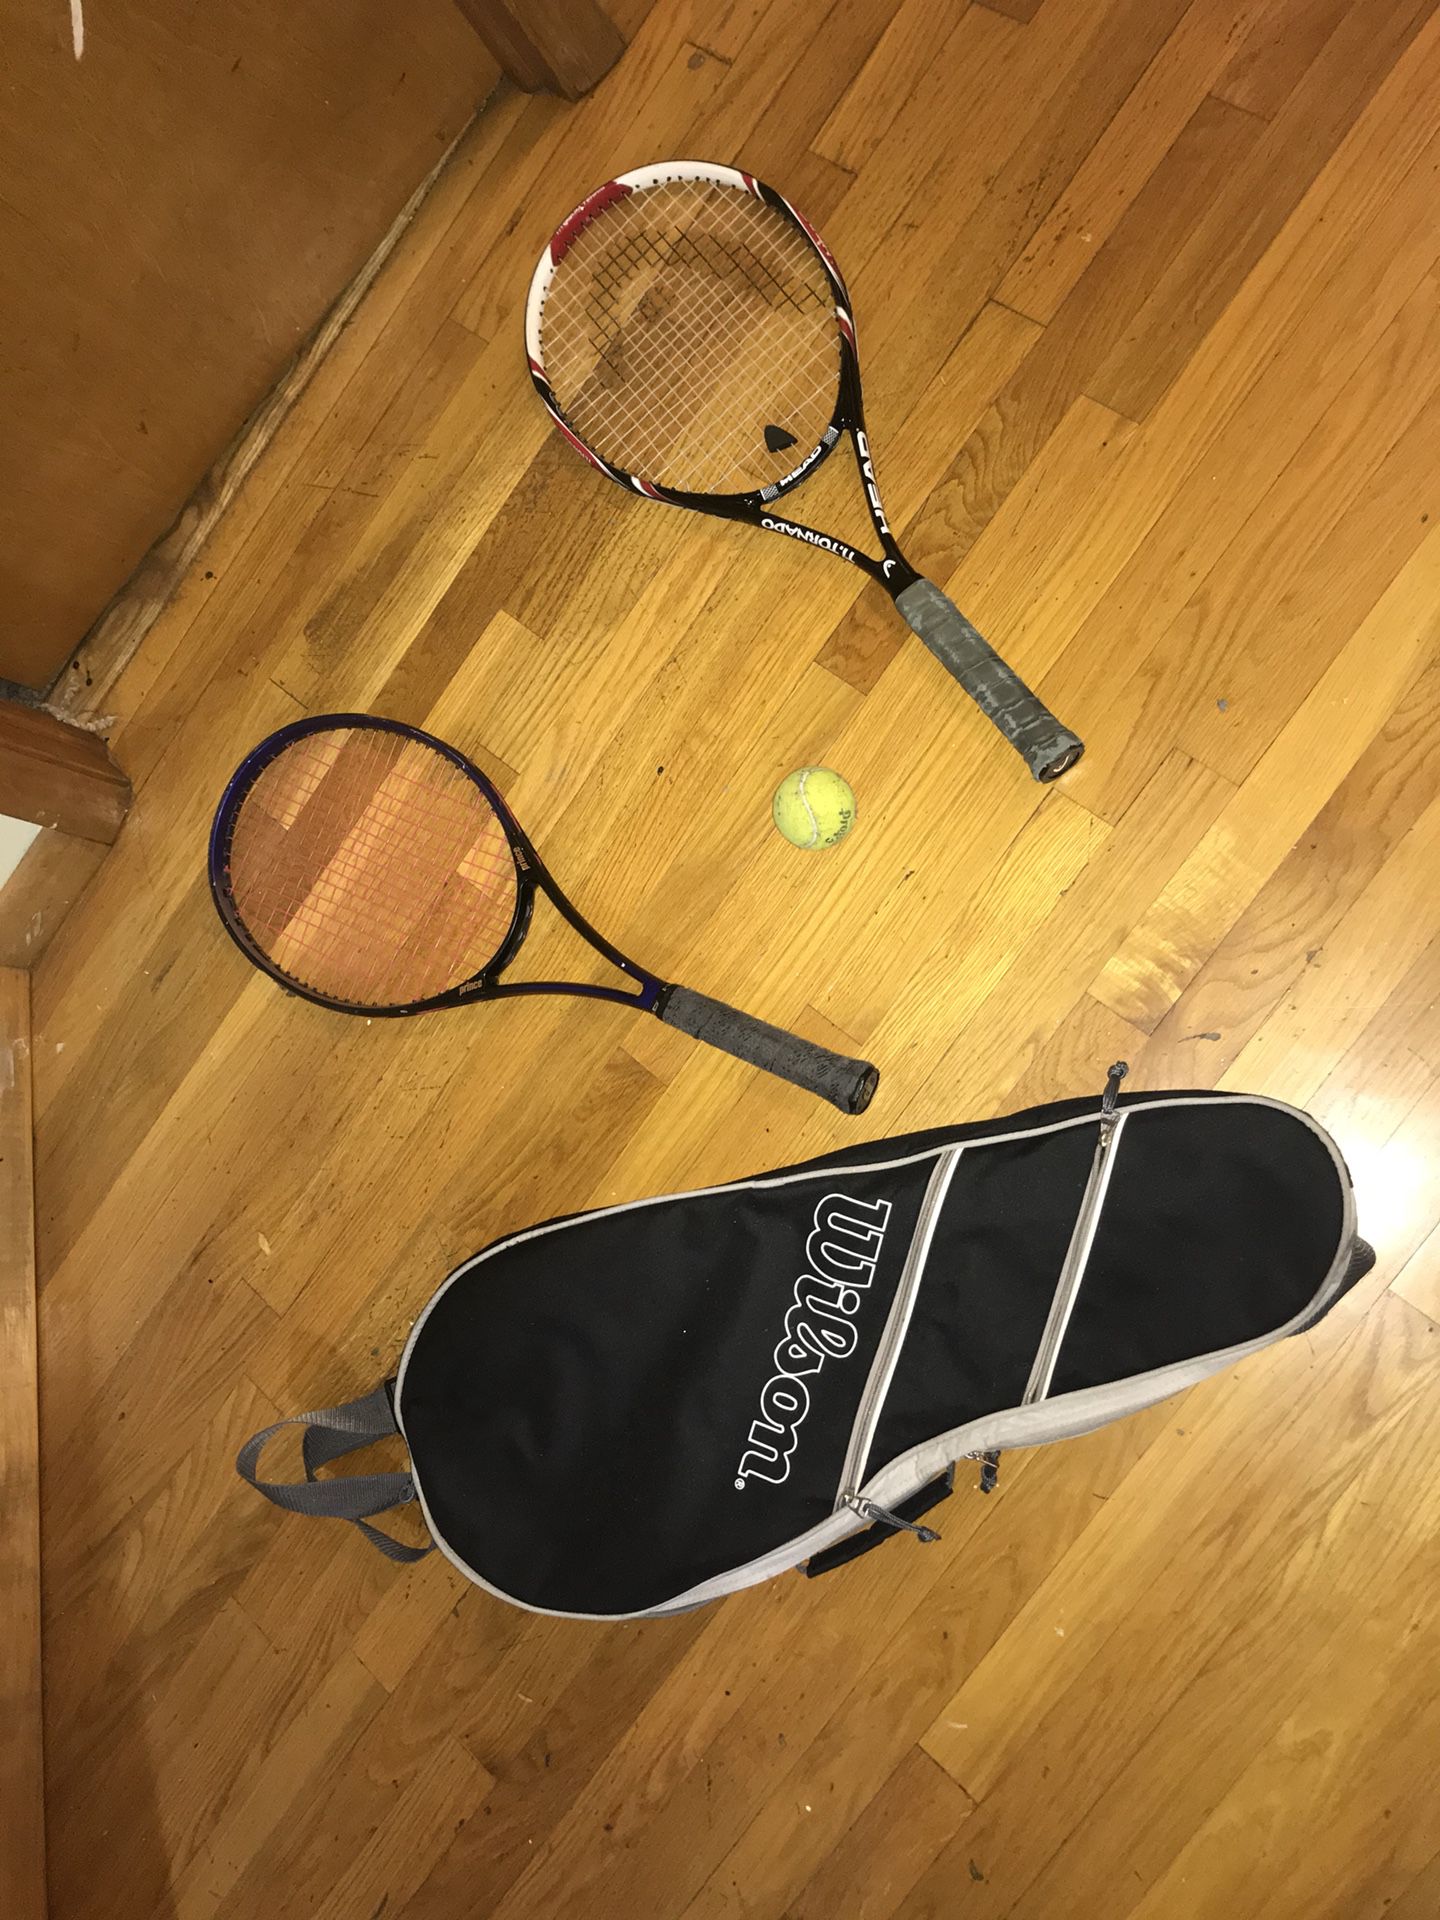 Tennis racket set